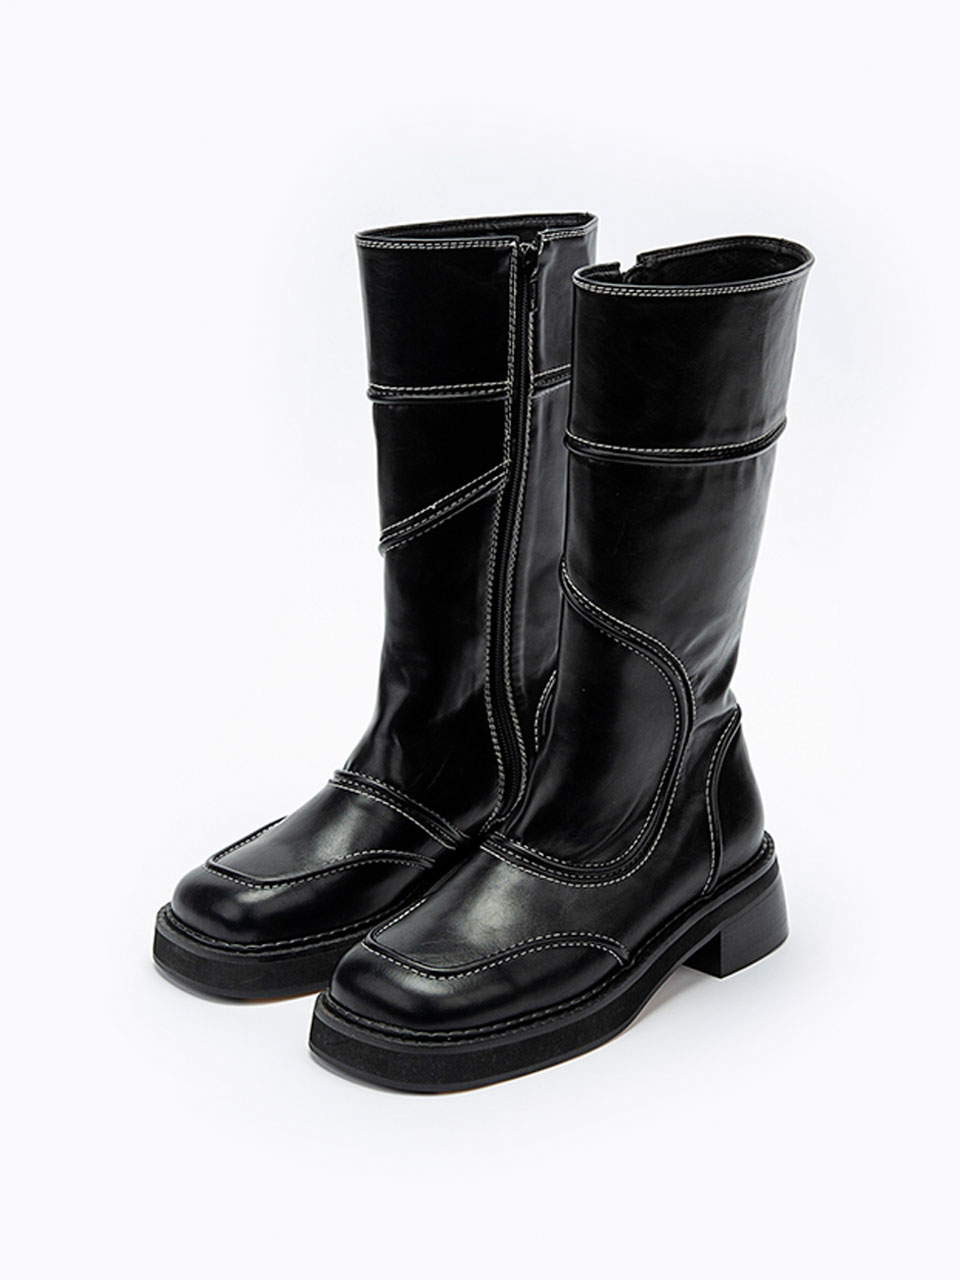 Stitch Line Boots (Black)